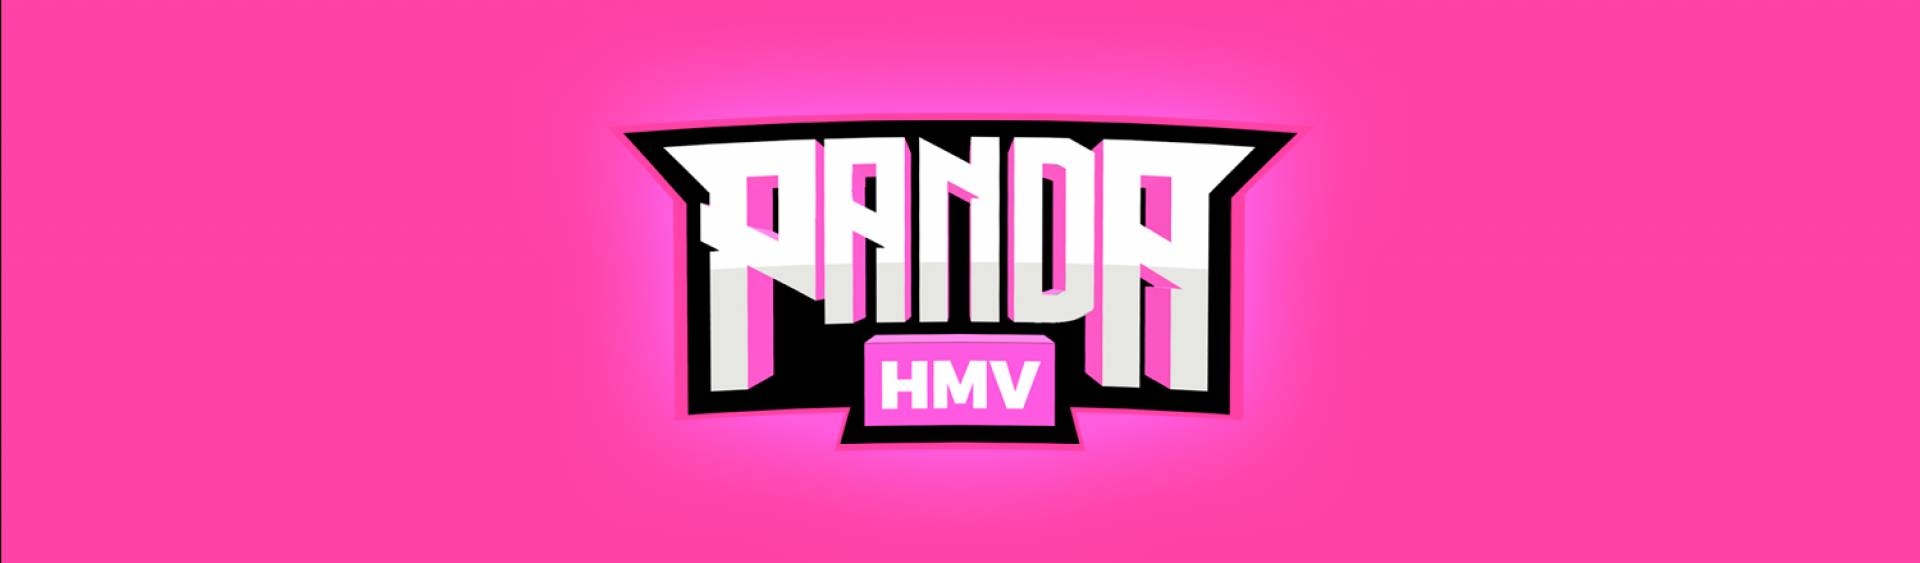 PandaHMV artist cover image